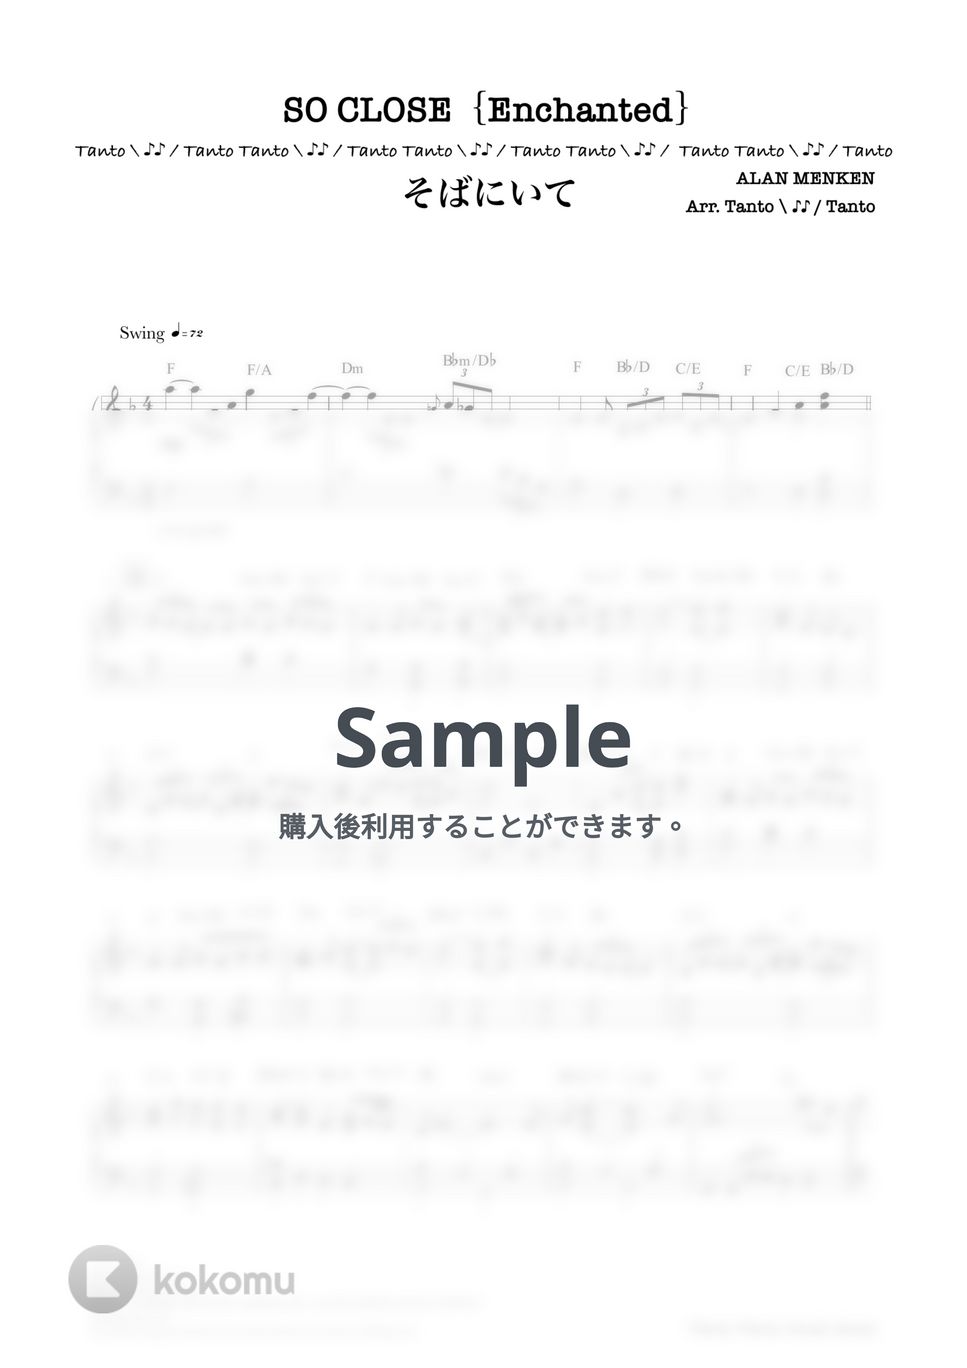 Alan Menken - SO CLOSE そばにいて『魔法にかけられて』 (初中級 Piano Solo in F) by Tanto Tanto